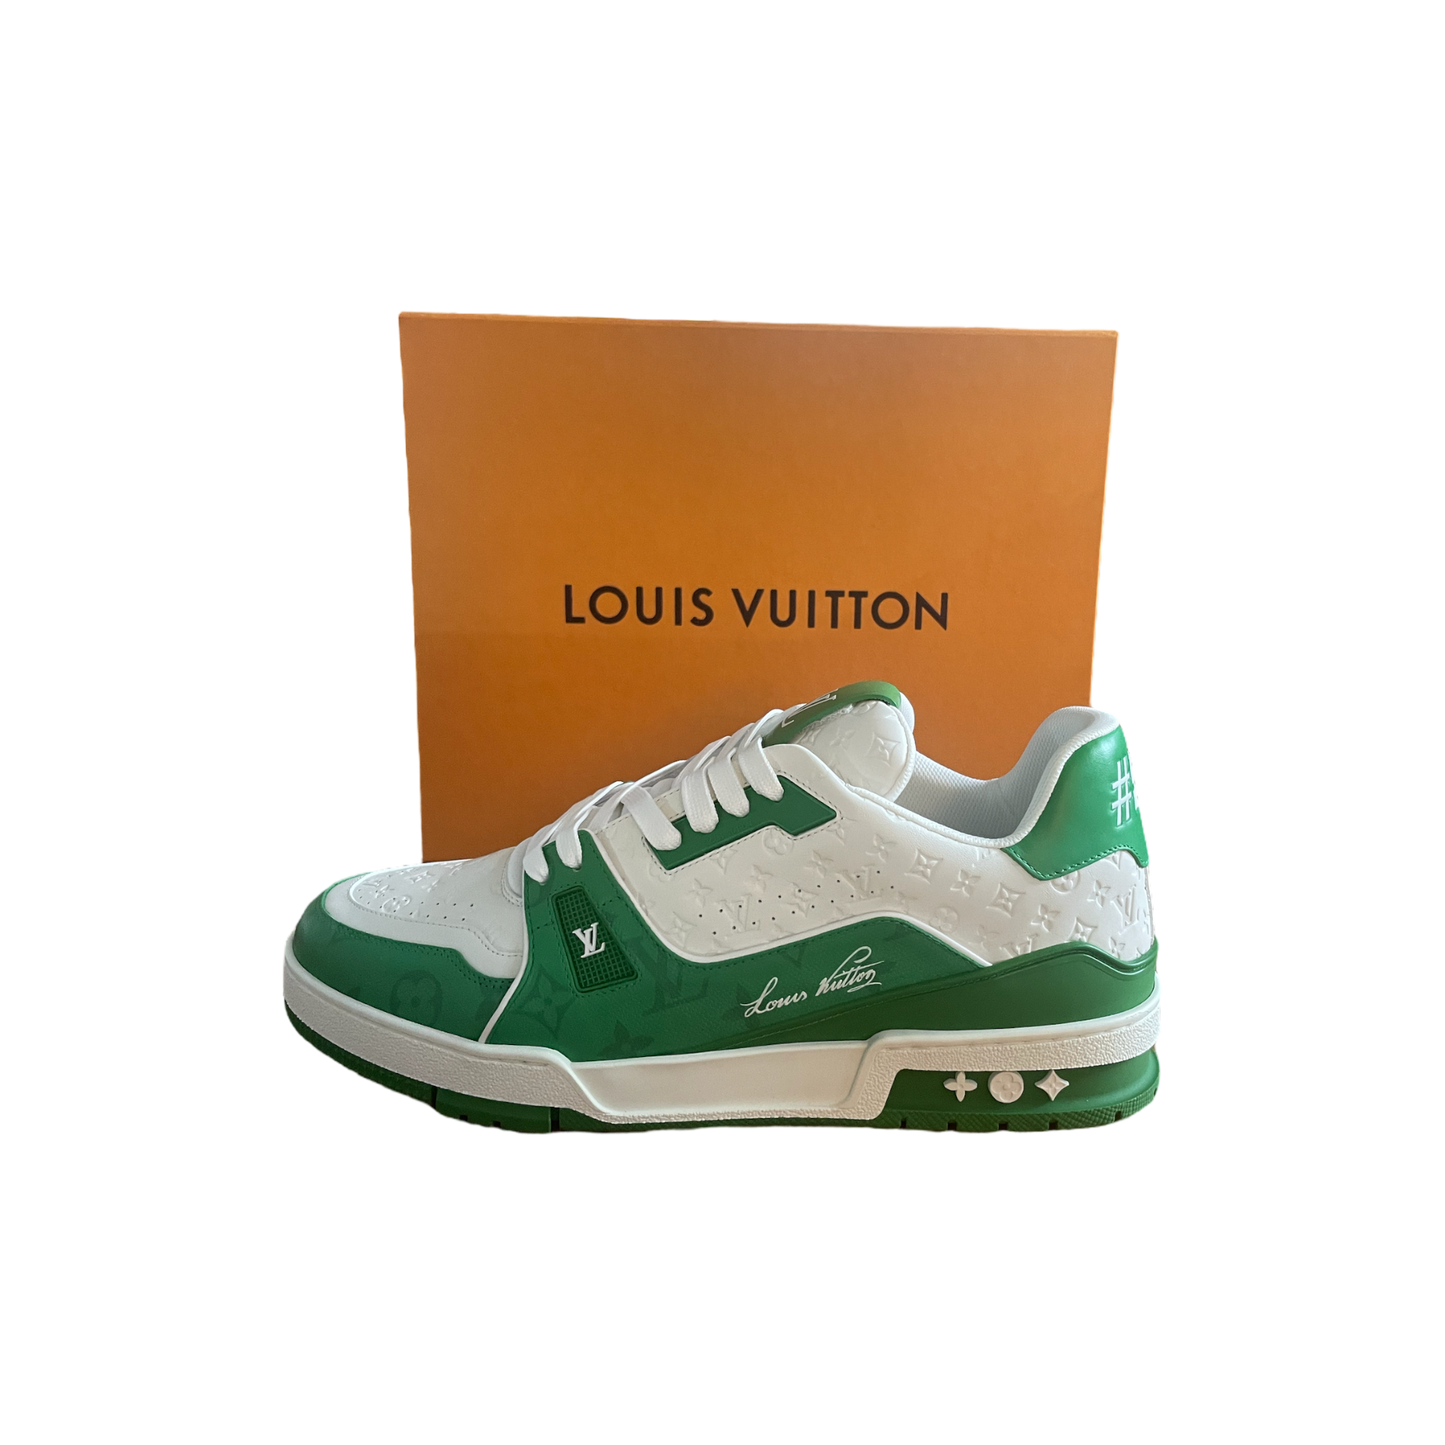 Louis Vuitton Trainer #54 Signature Green White - Store Exclusive